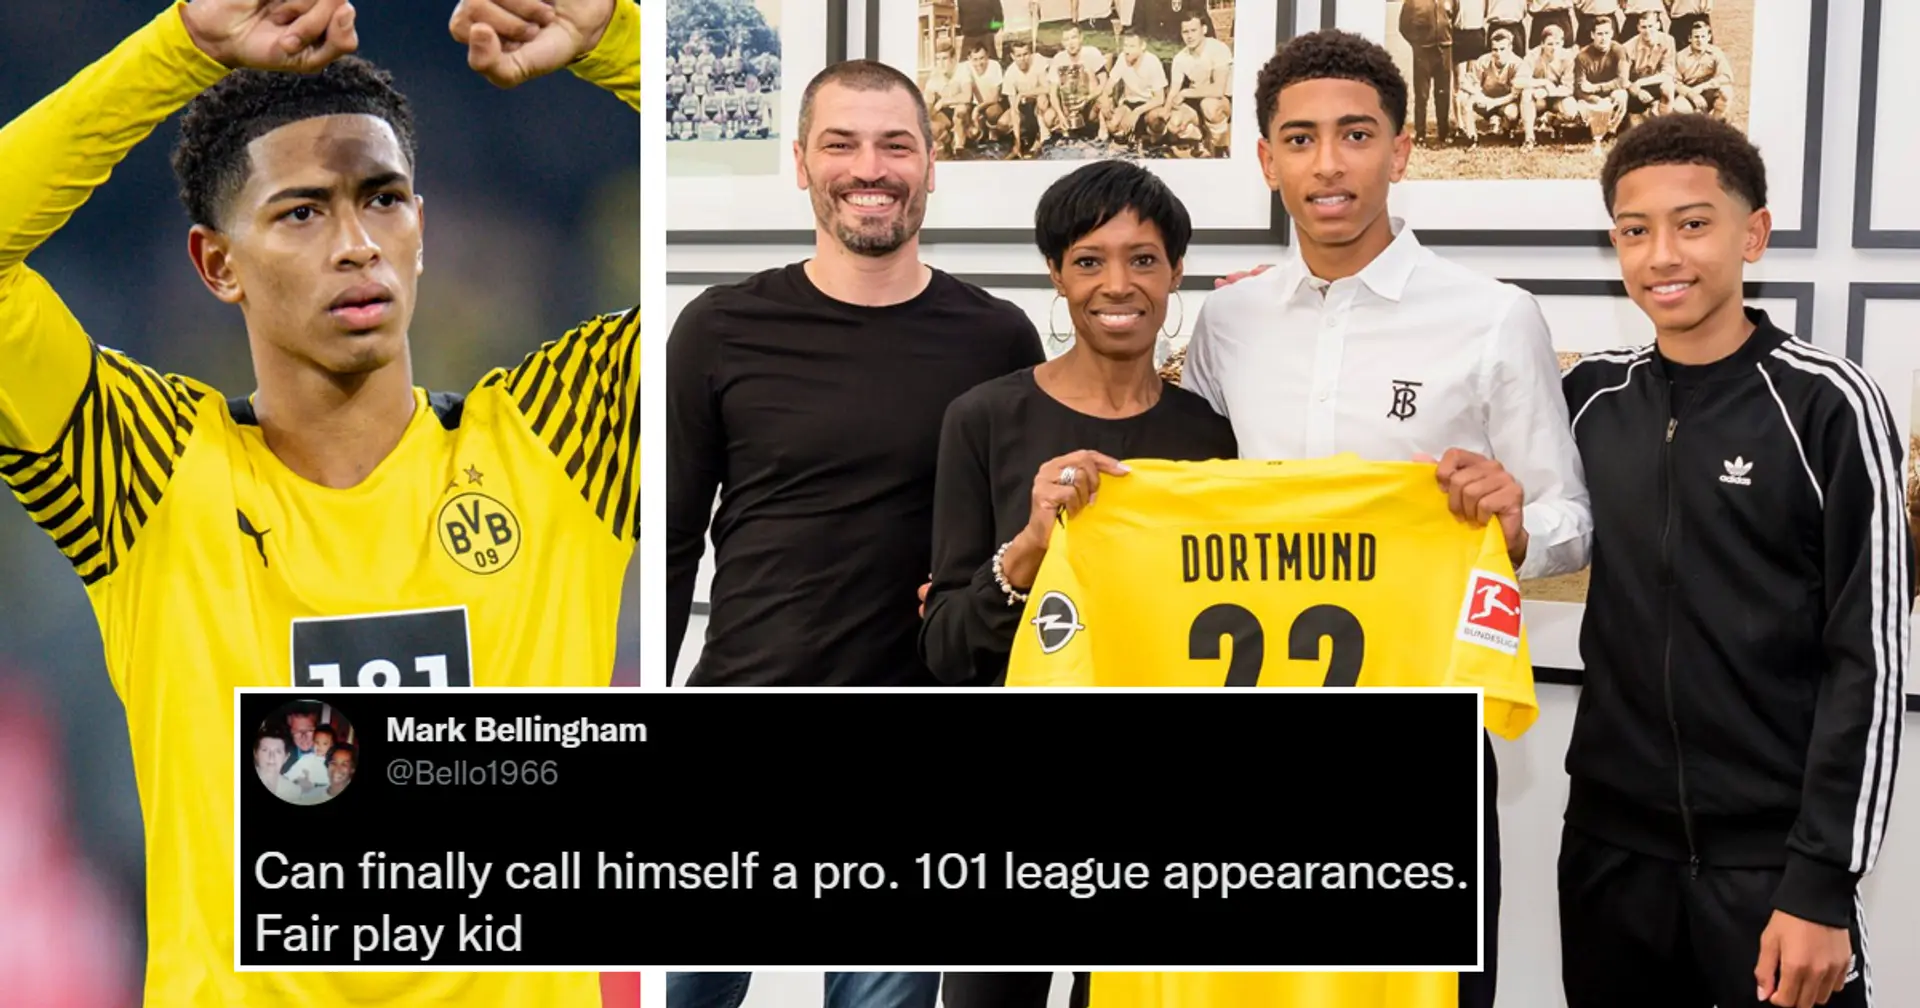 "Endlich darf er sich Profi nennen": Jude Bellinghams Vater gratuliert ihm zum 101. Liga-Einsatz